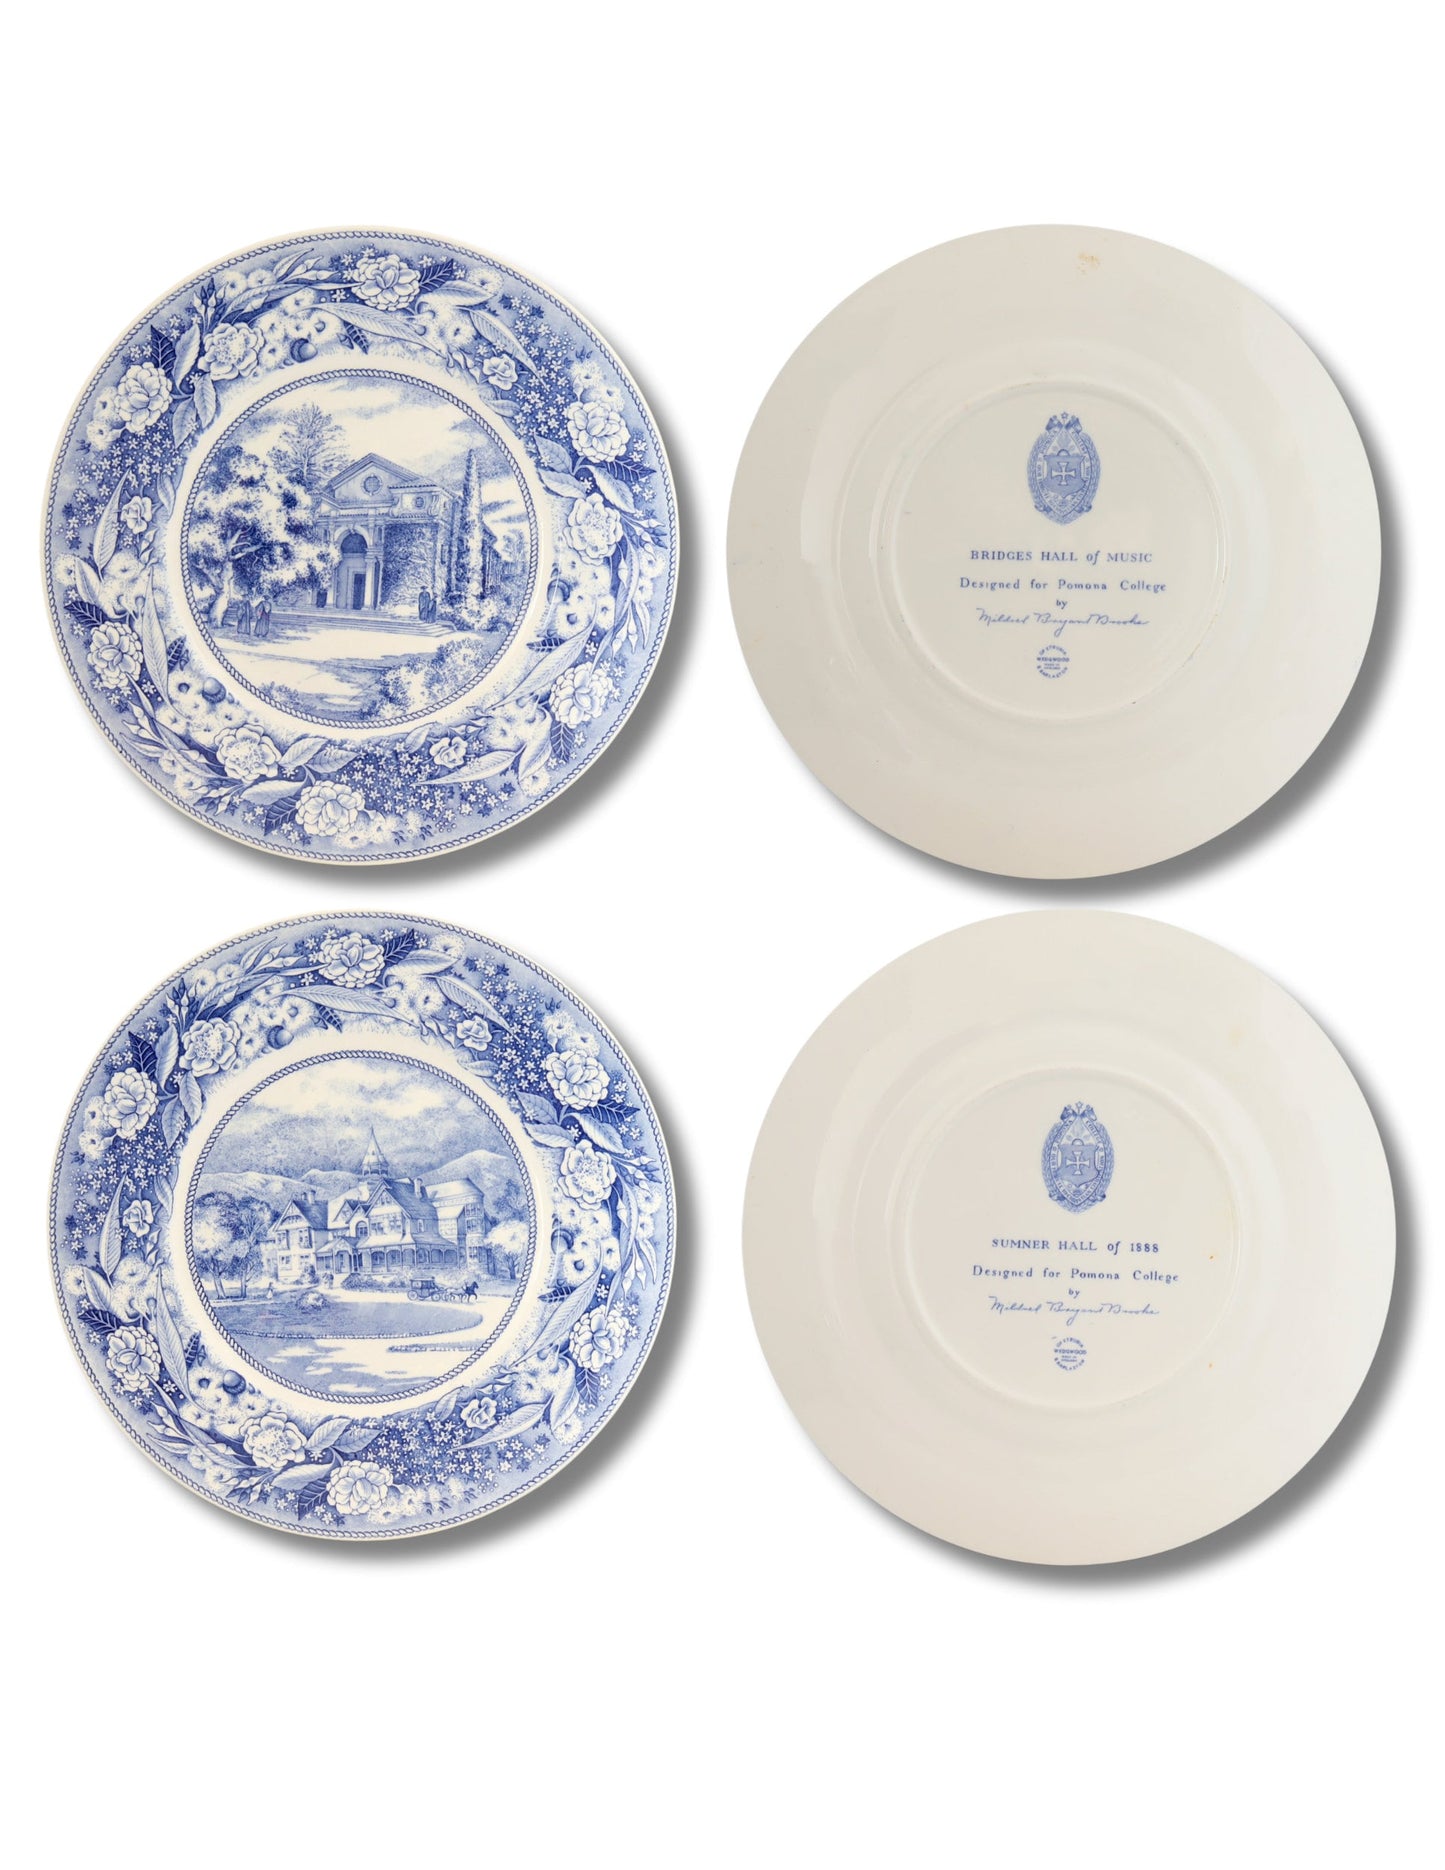 Vintage Wedgwood Pomona College Dinner Plates, Set of Eight